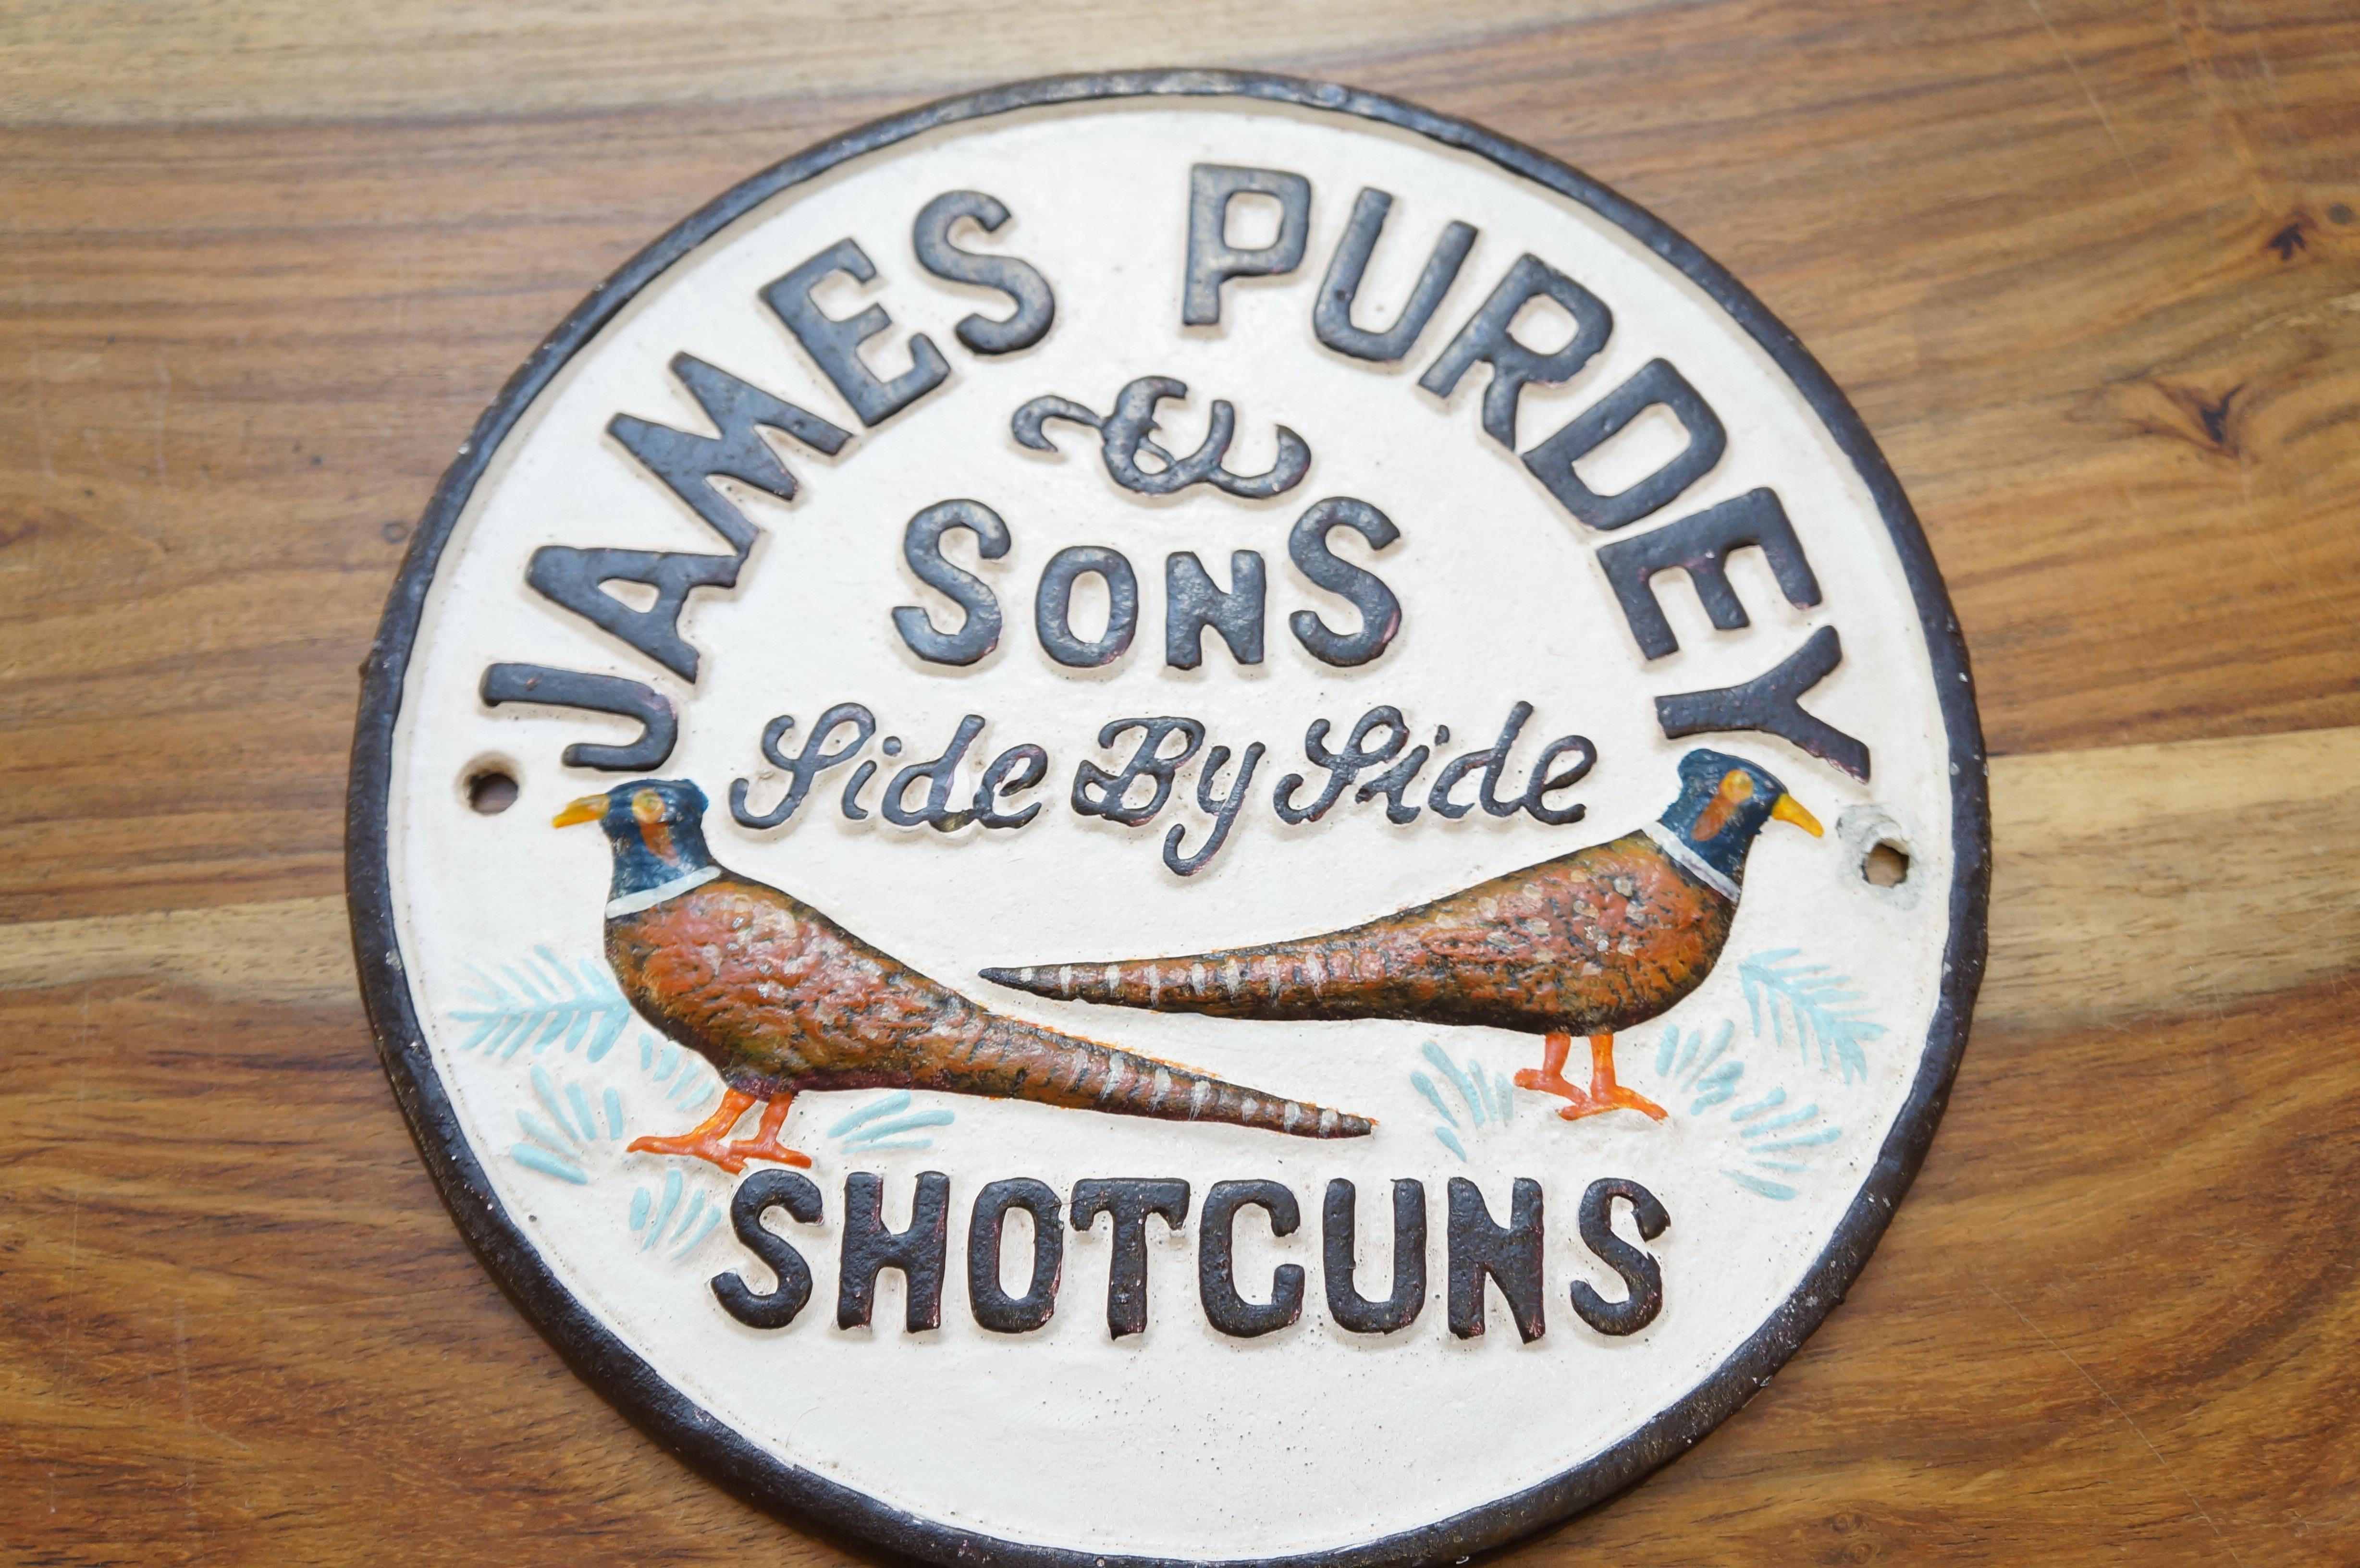 Cast iron sign James Purdey shotguns